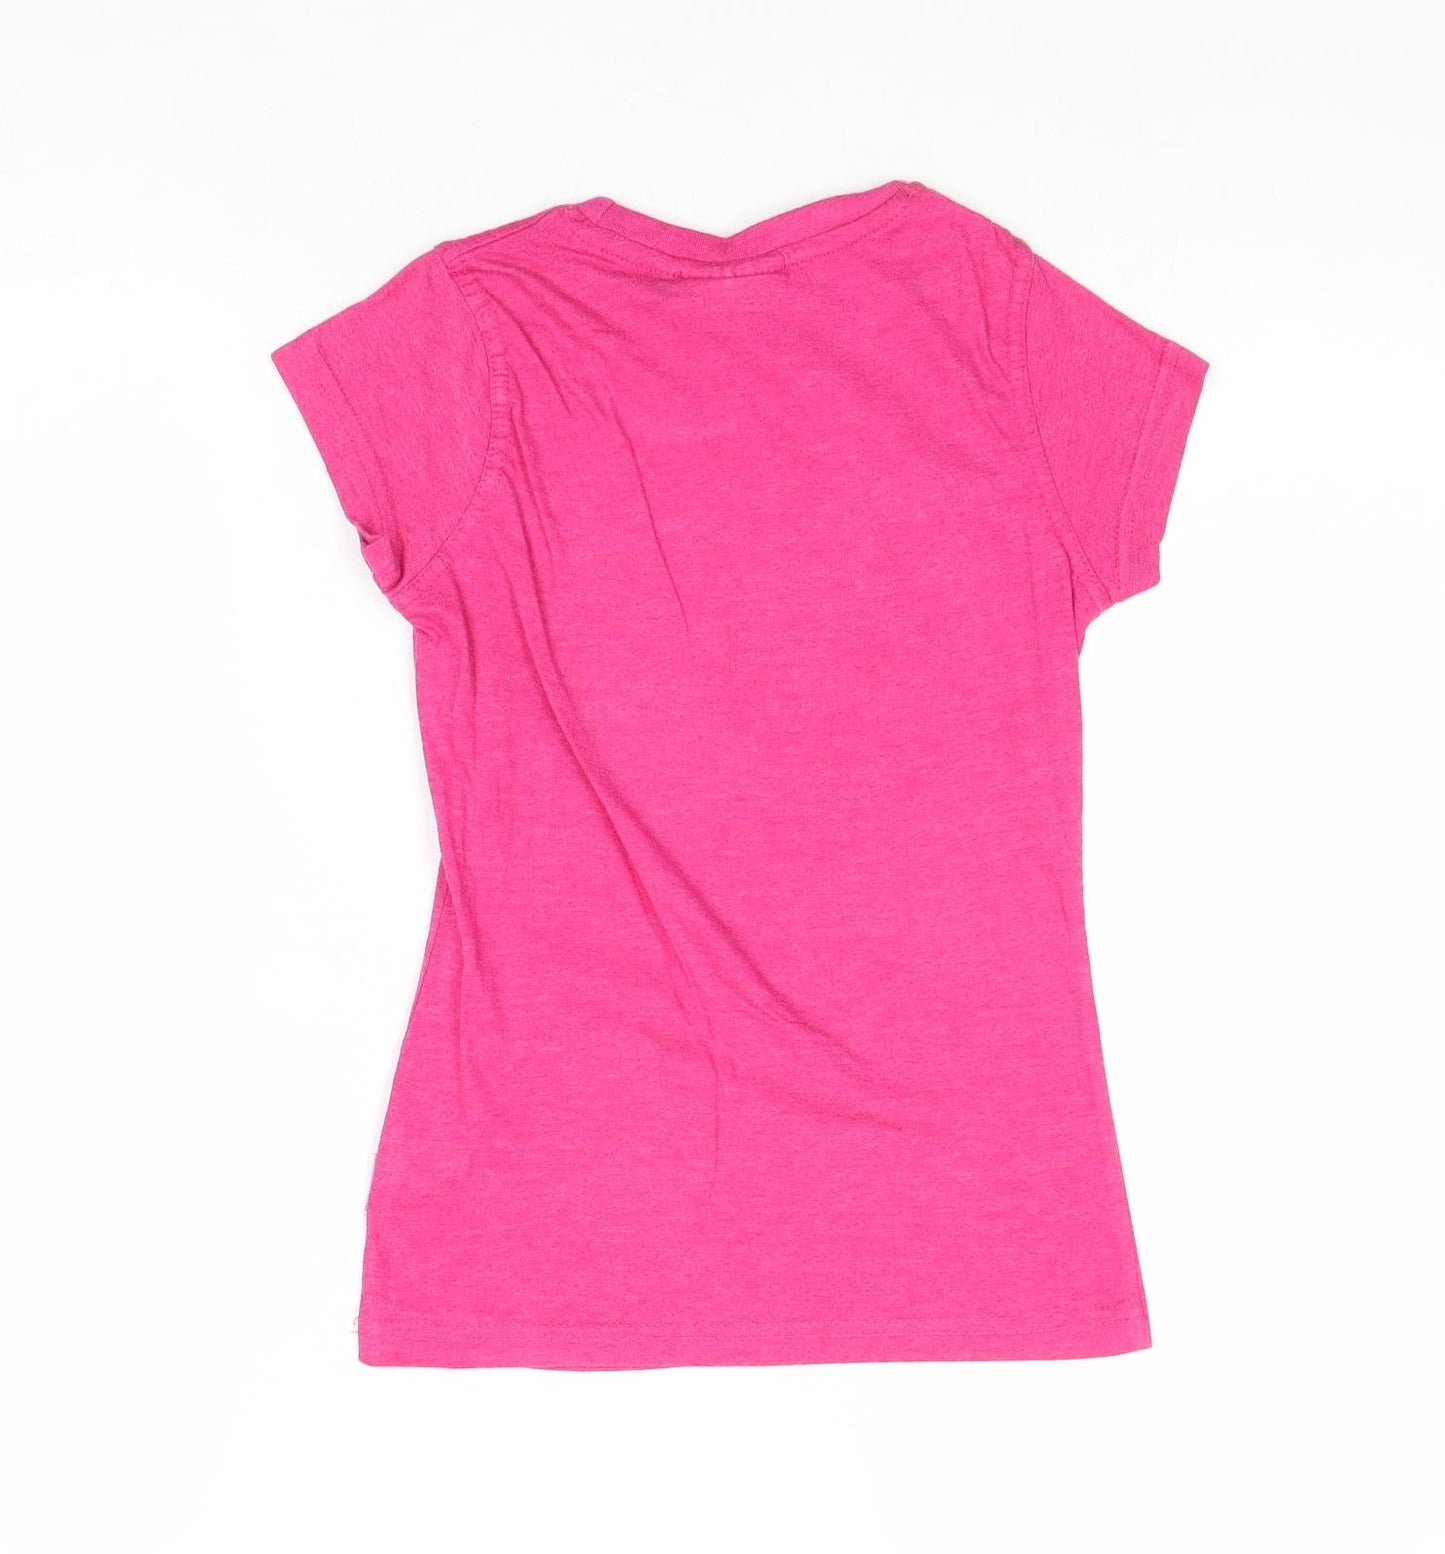 Everlast Girls Pink Cotton Pullover T-Shirt Size 9-10 Years Round Neck Pullover - New York